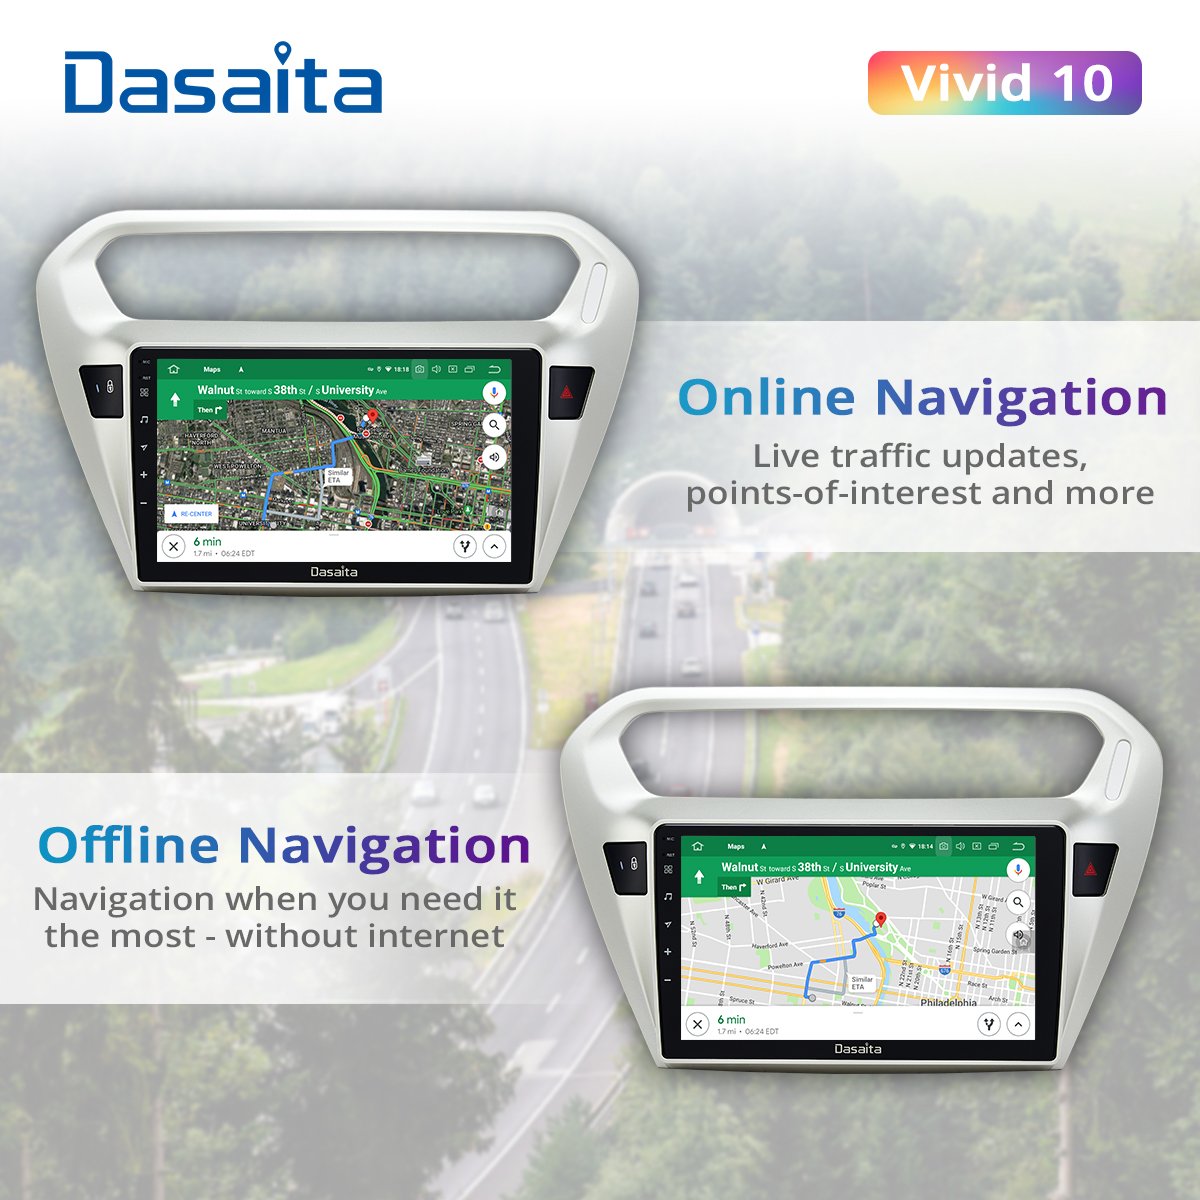 Dasaita Vivid For Peugeot 301 2014 2015 2016 Car radio bluetooth android 1 din Navigator GPS Bluetooth 1280*720 IPS DSP stereo